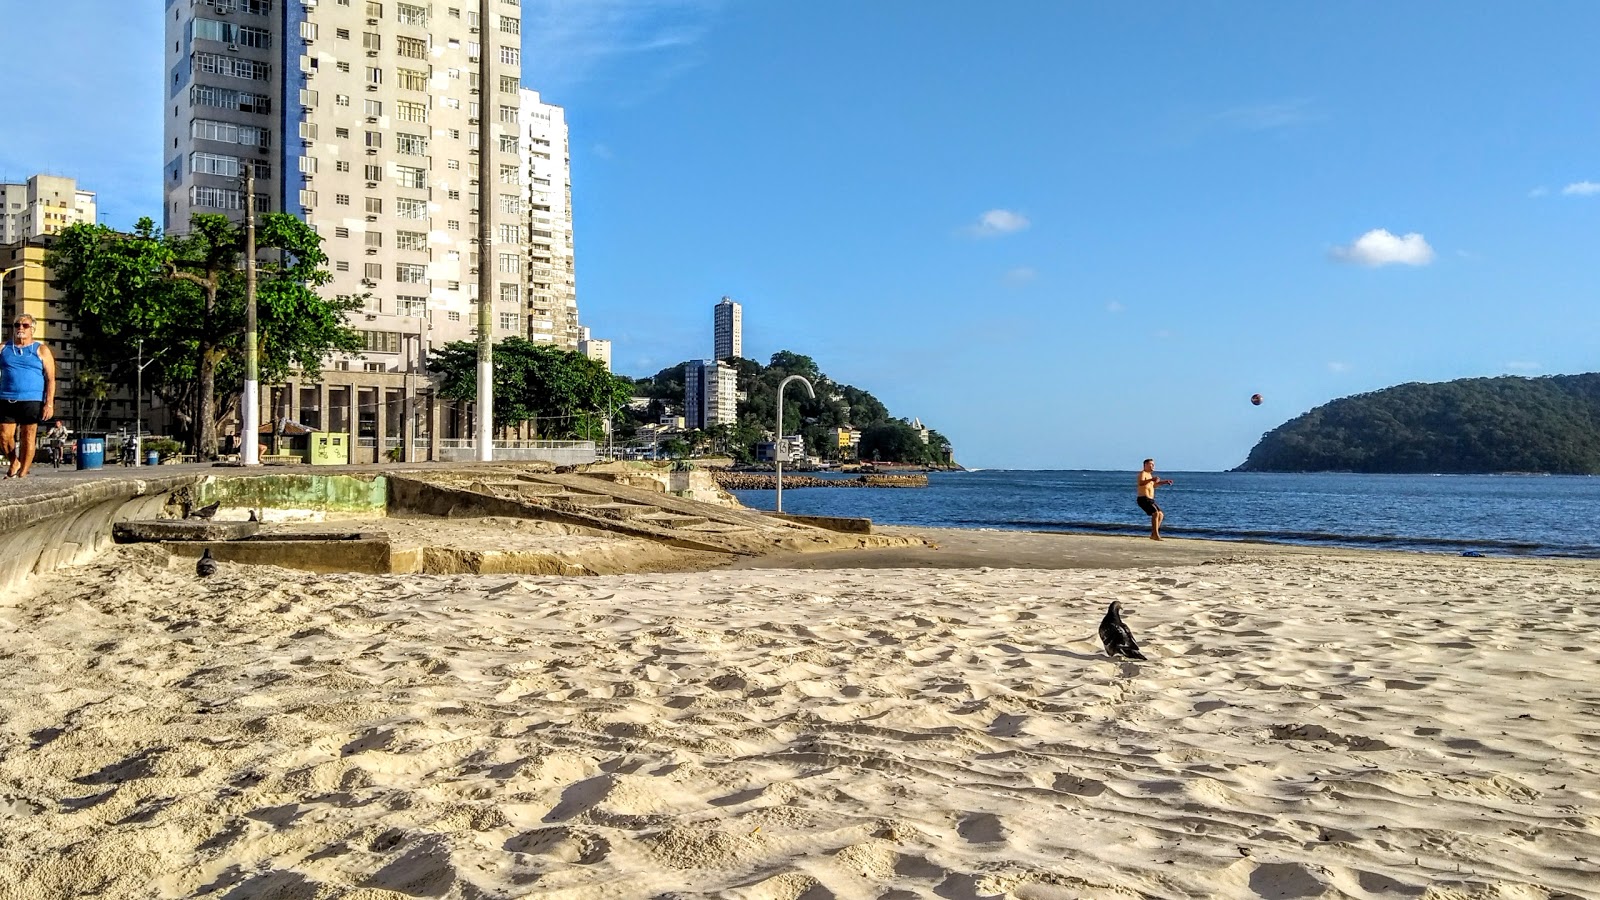 Photo of Praia dos Milionarios and the settlement